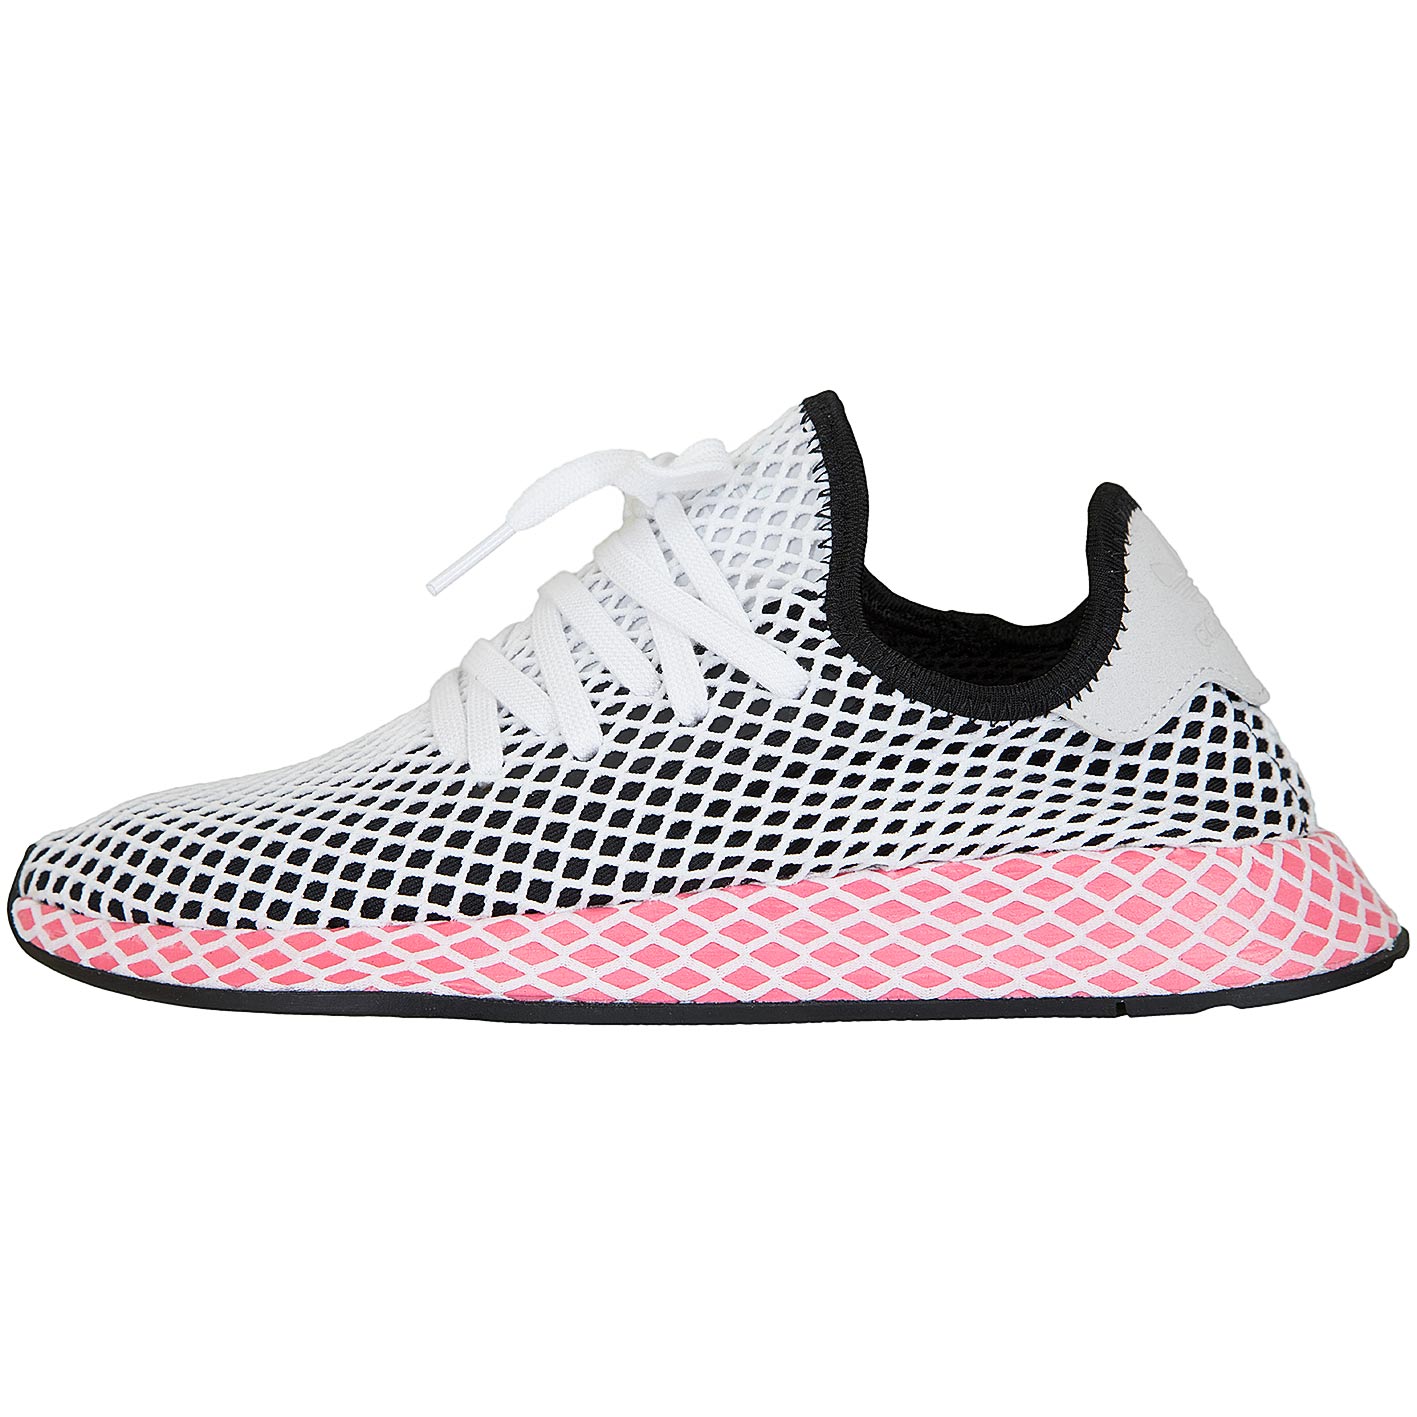 ☆ Adidas Originals Damen Sneaker Deerupt Runner schwarz/weiß/pink - hier  bestellen!